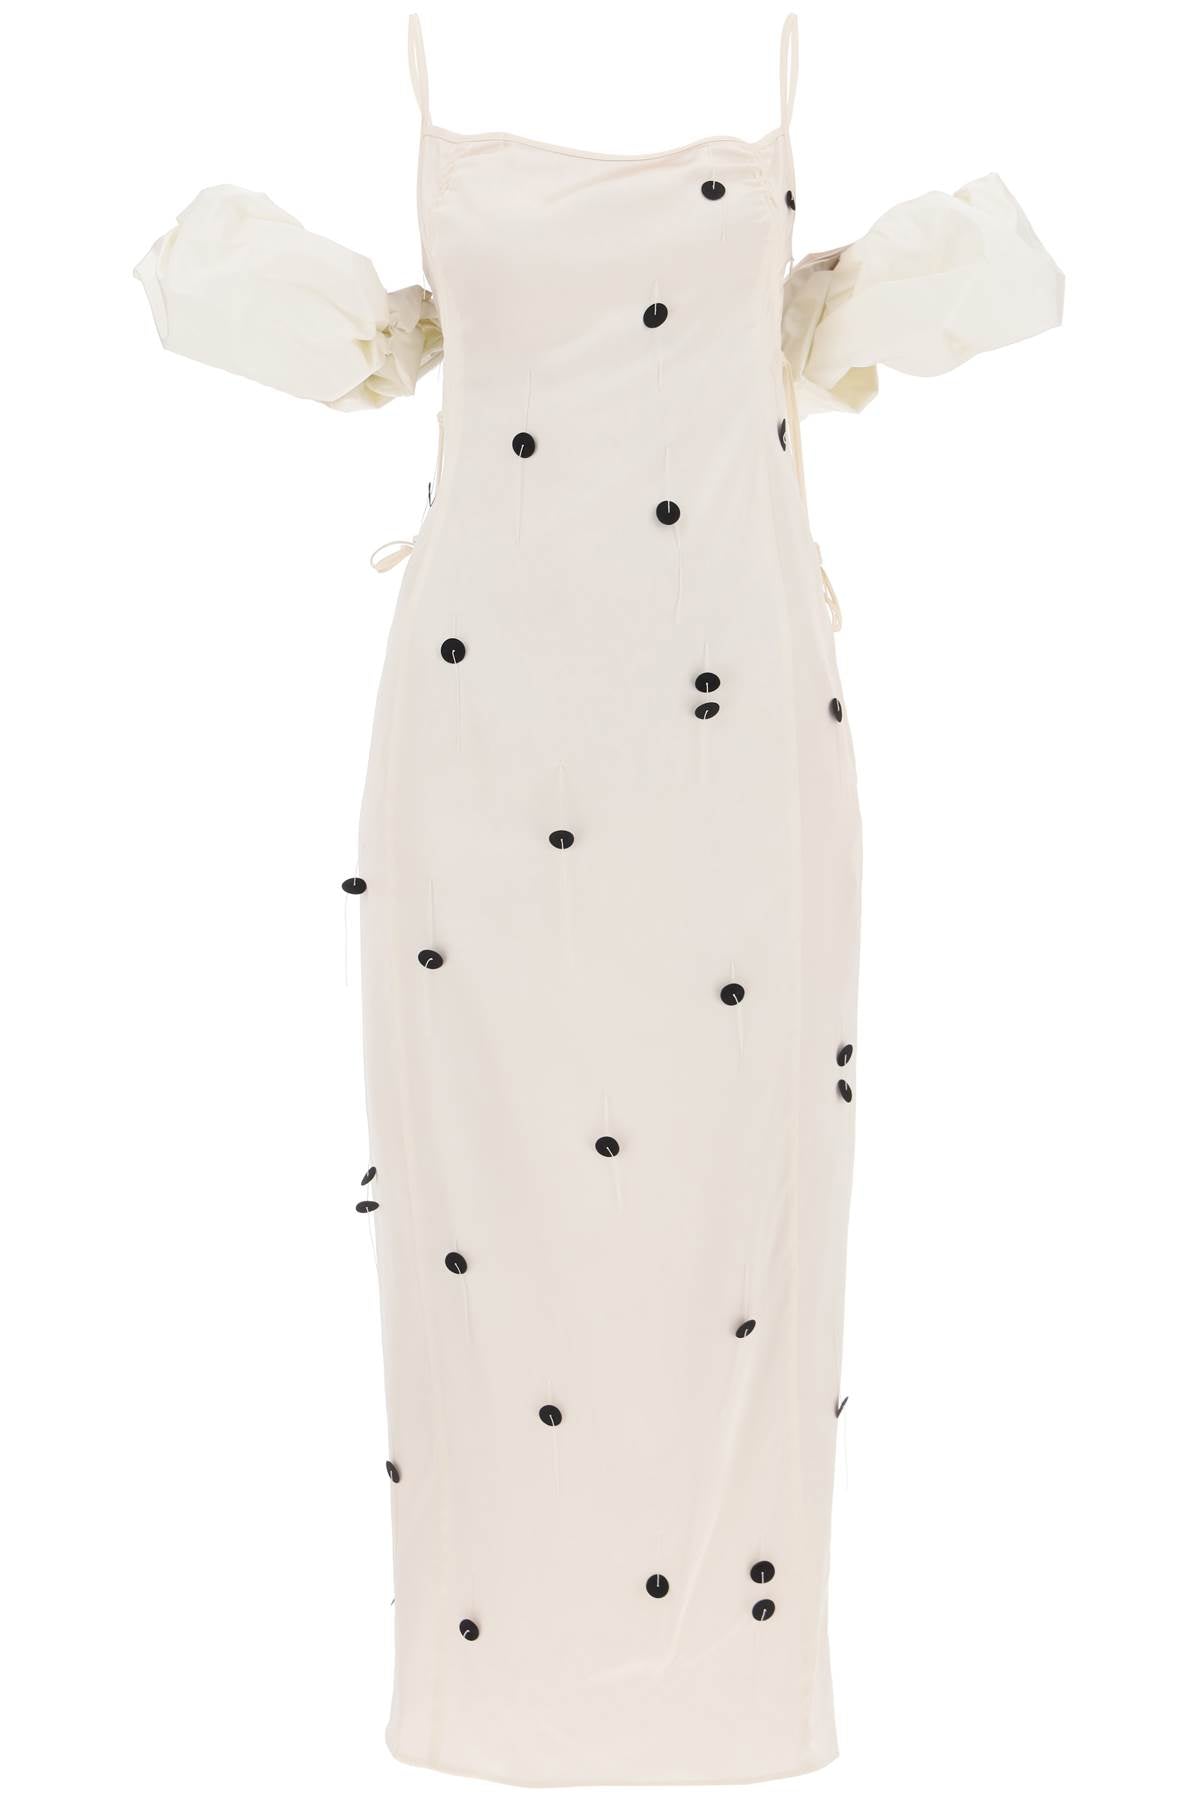 JACQUEMUS Stunning White Slip Dress with Detachable Balloon Sleeves for Women